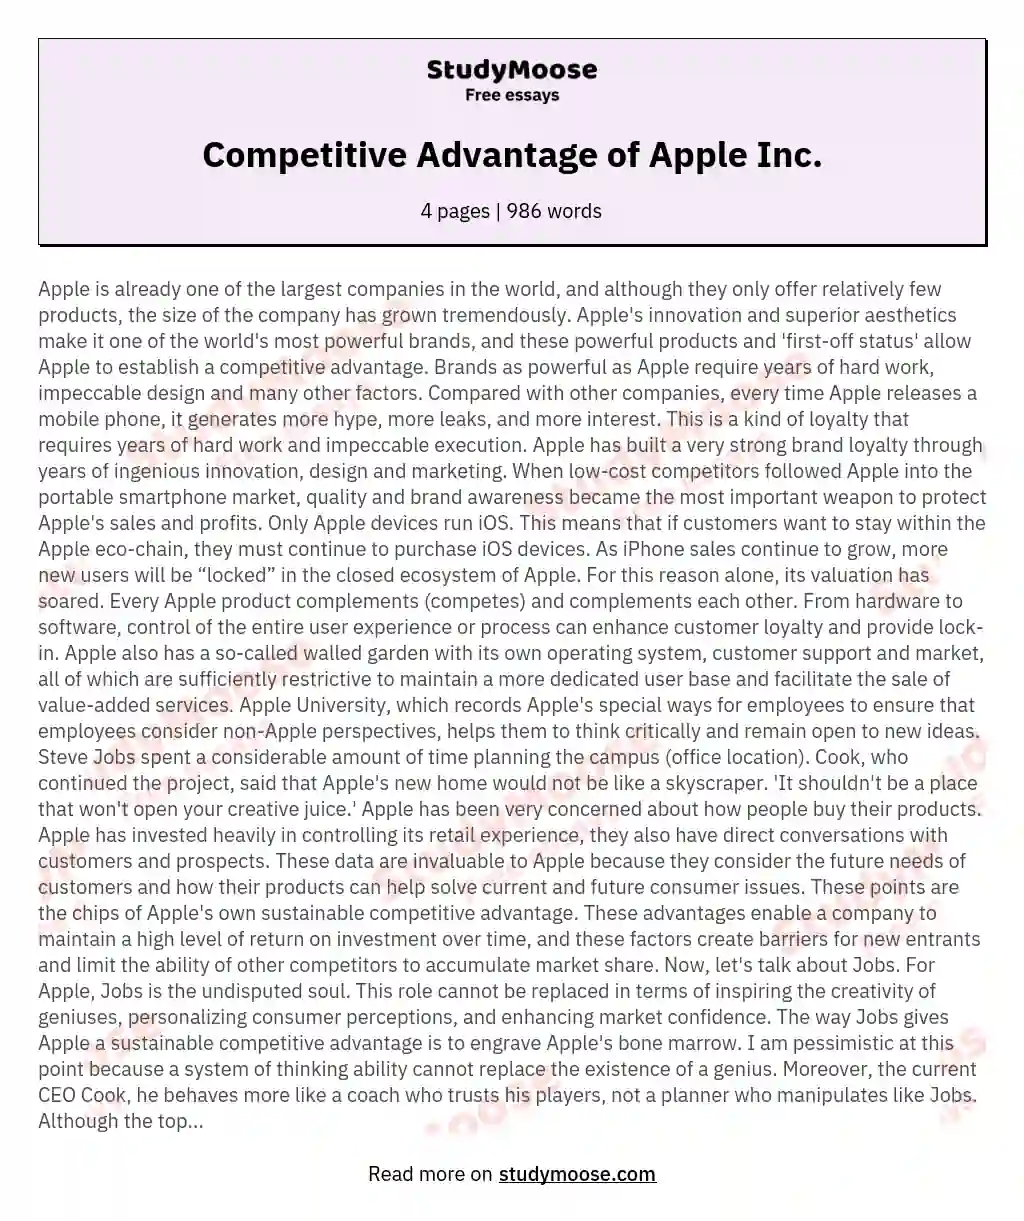 Competitive Advantage of Apple Inc. essay